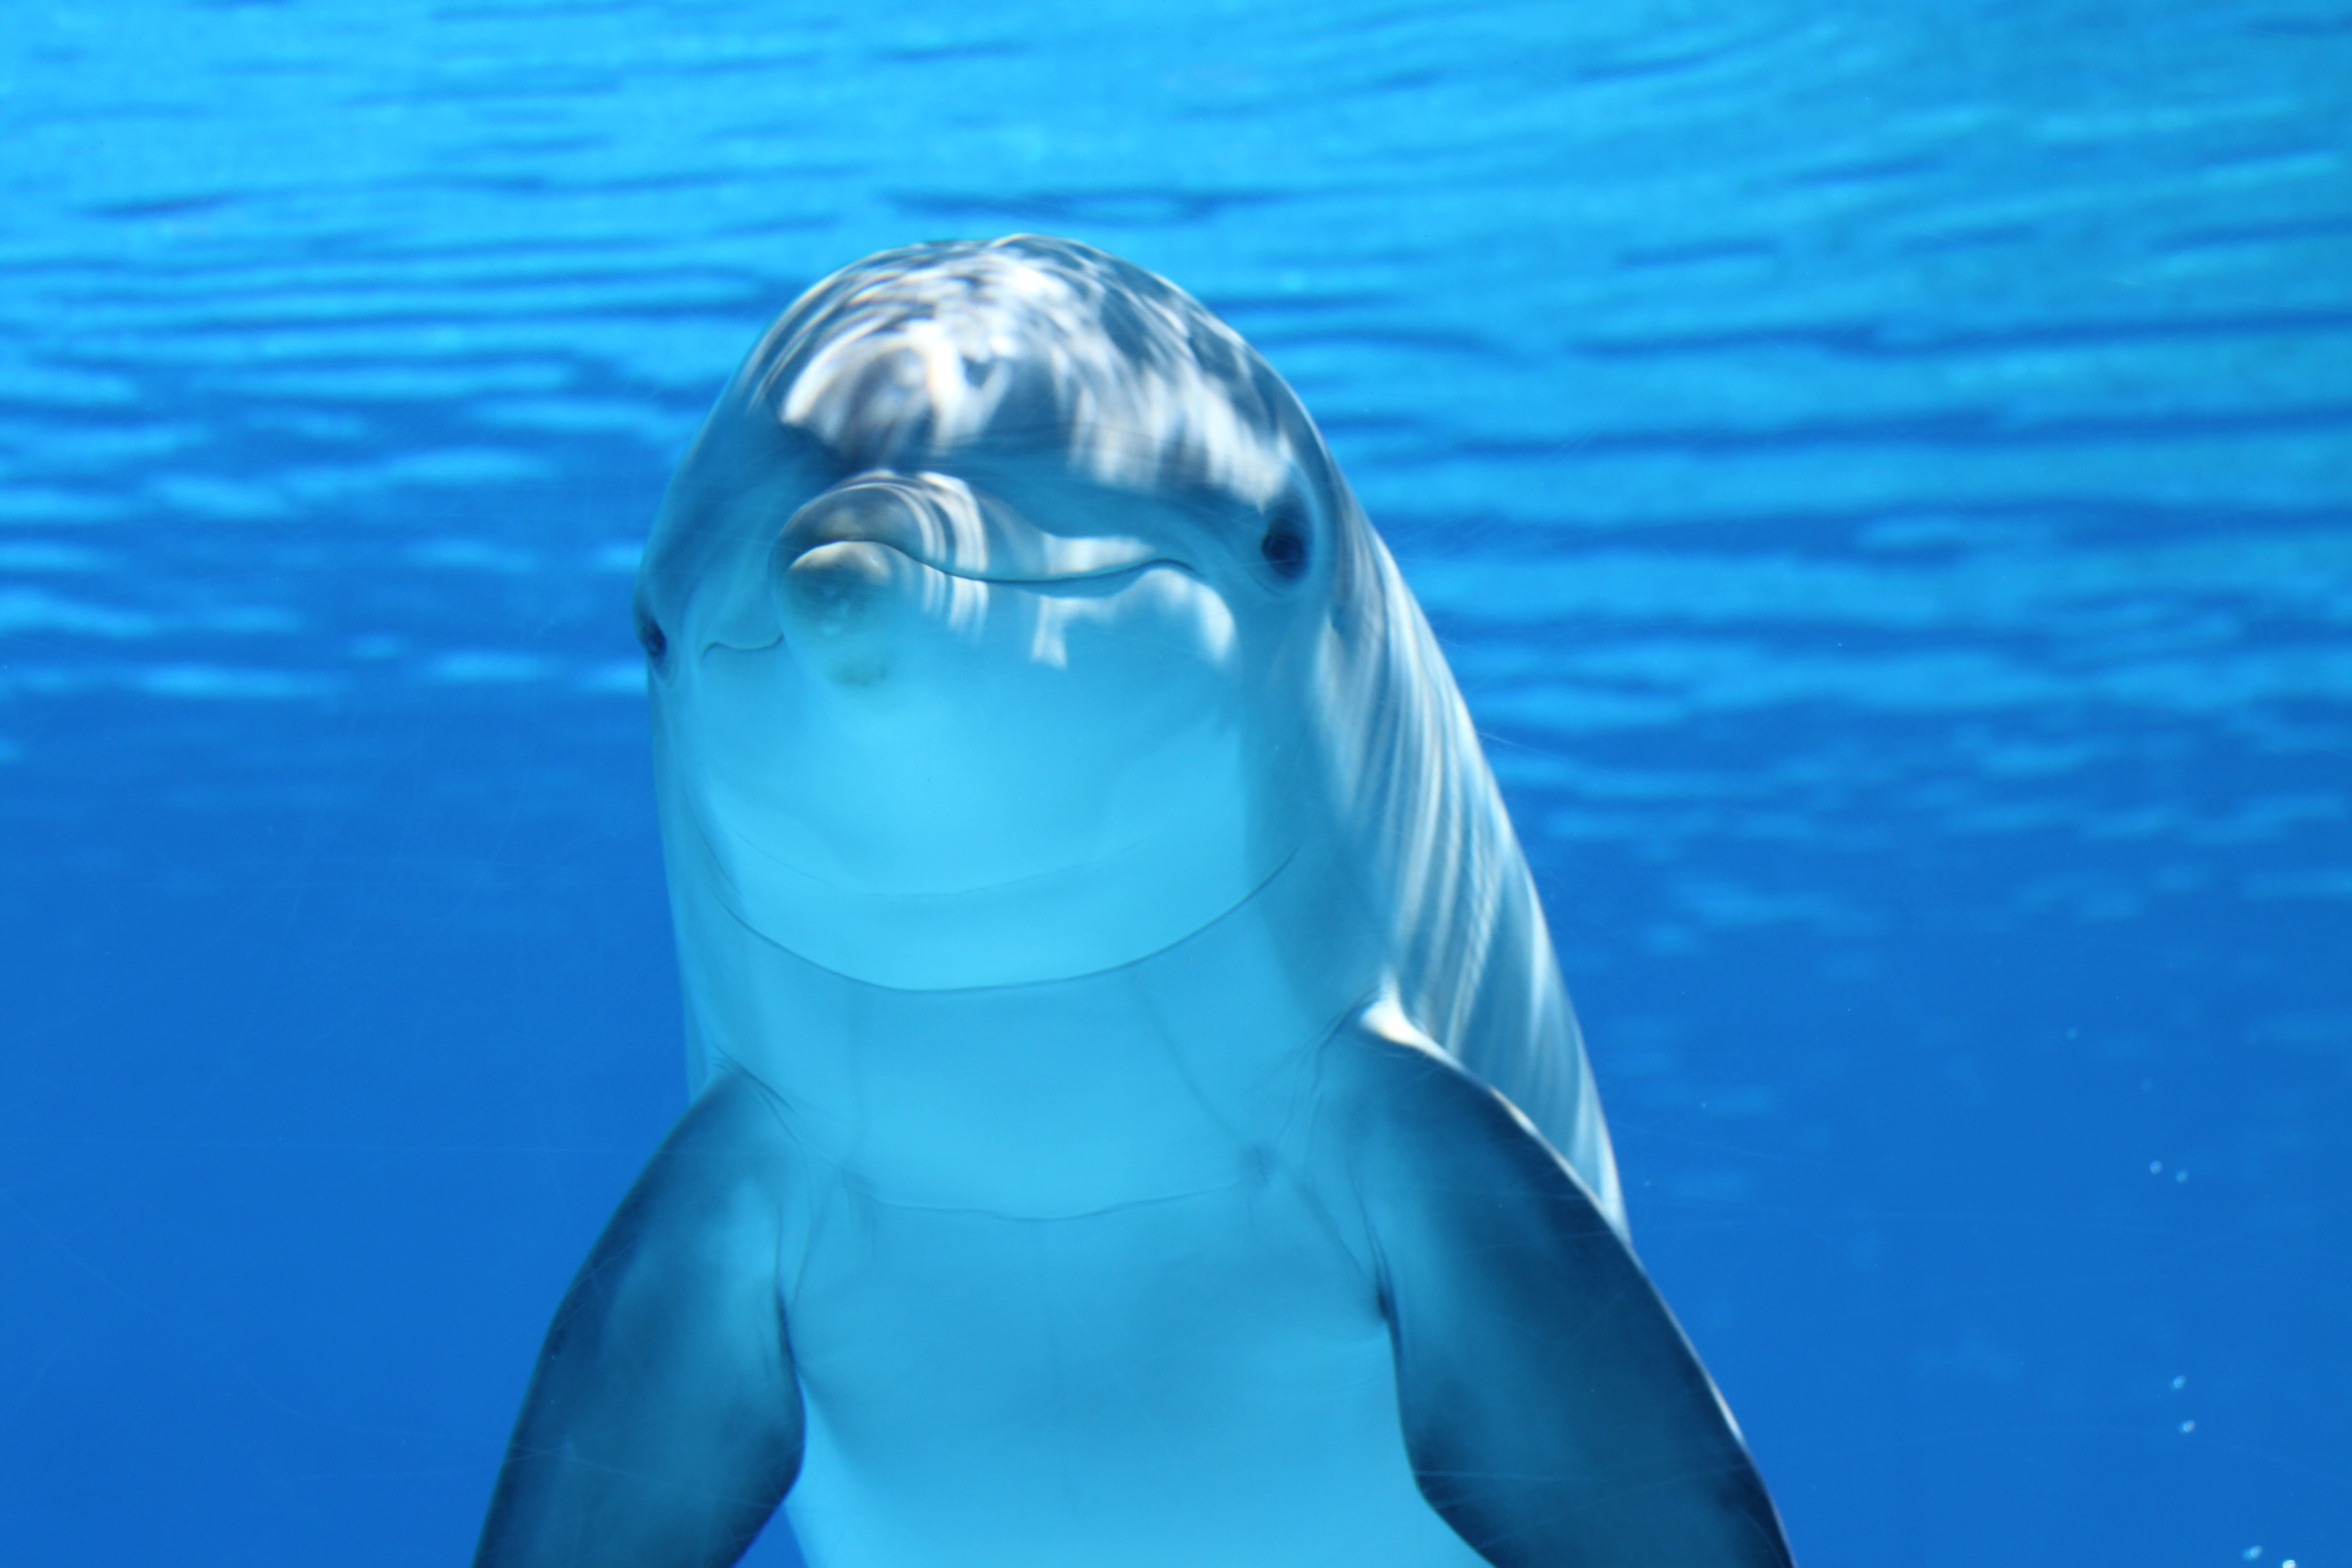 745837 descargar imagen animales, delfin, azul, mamífero, submarina: fondos de pantalla y protectores de pantalla gratis